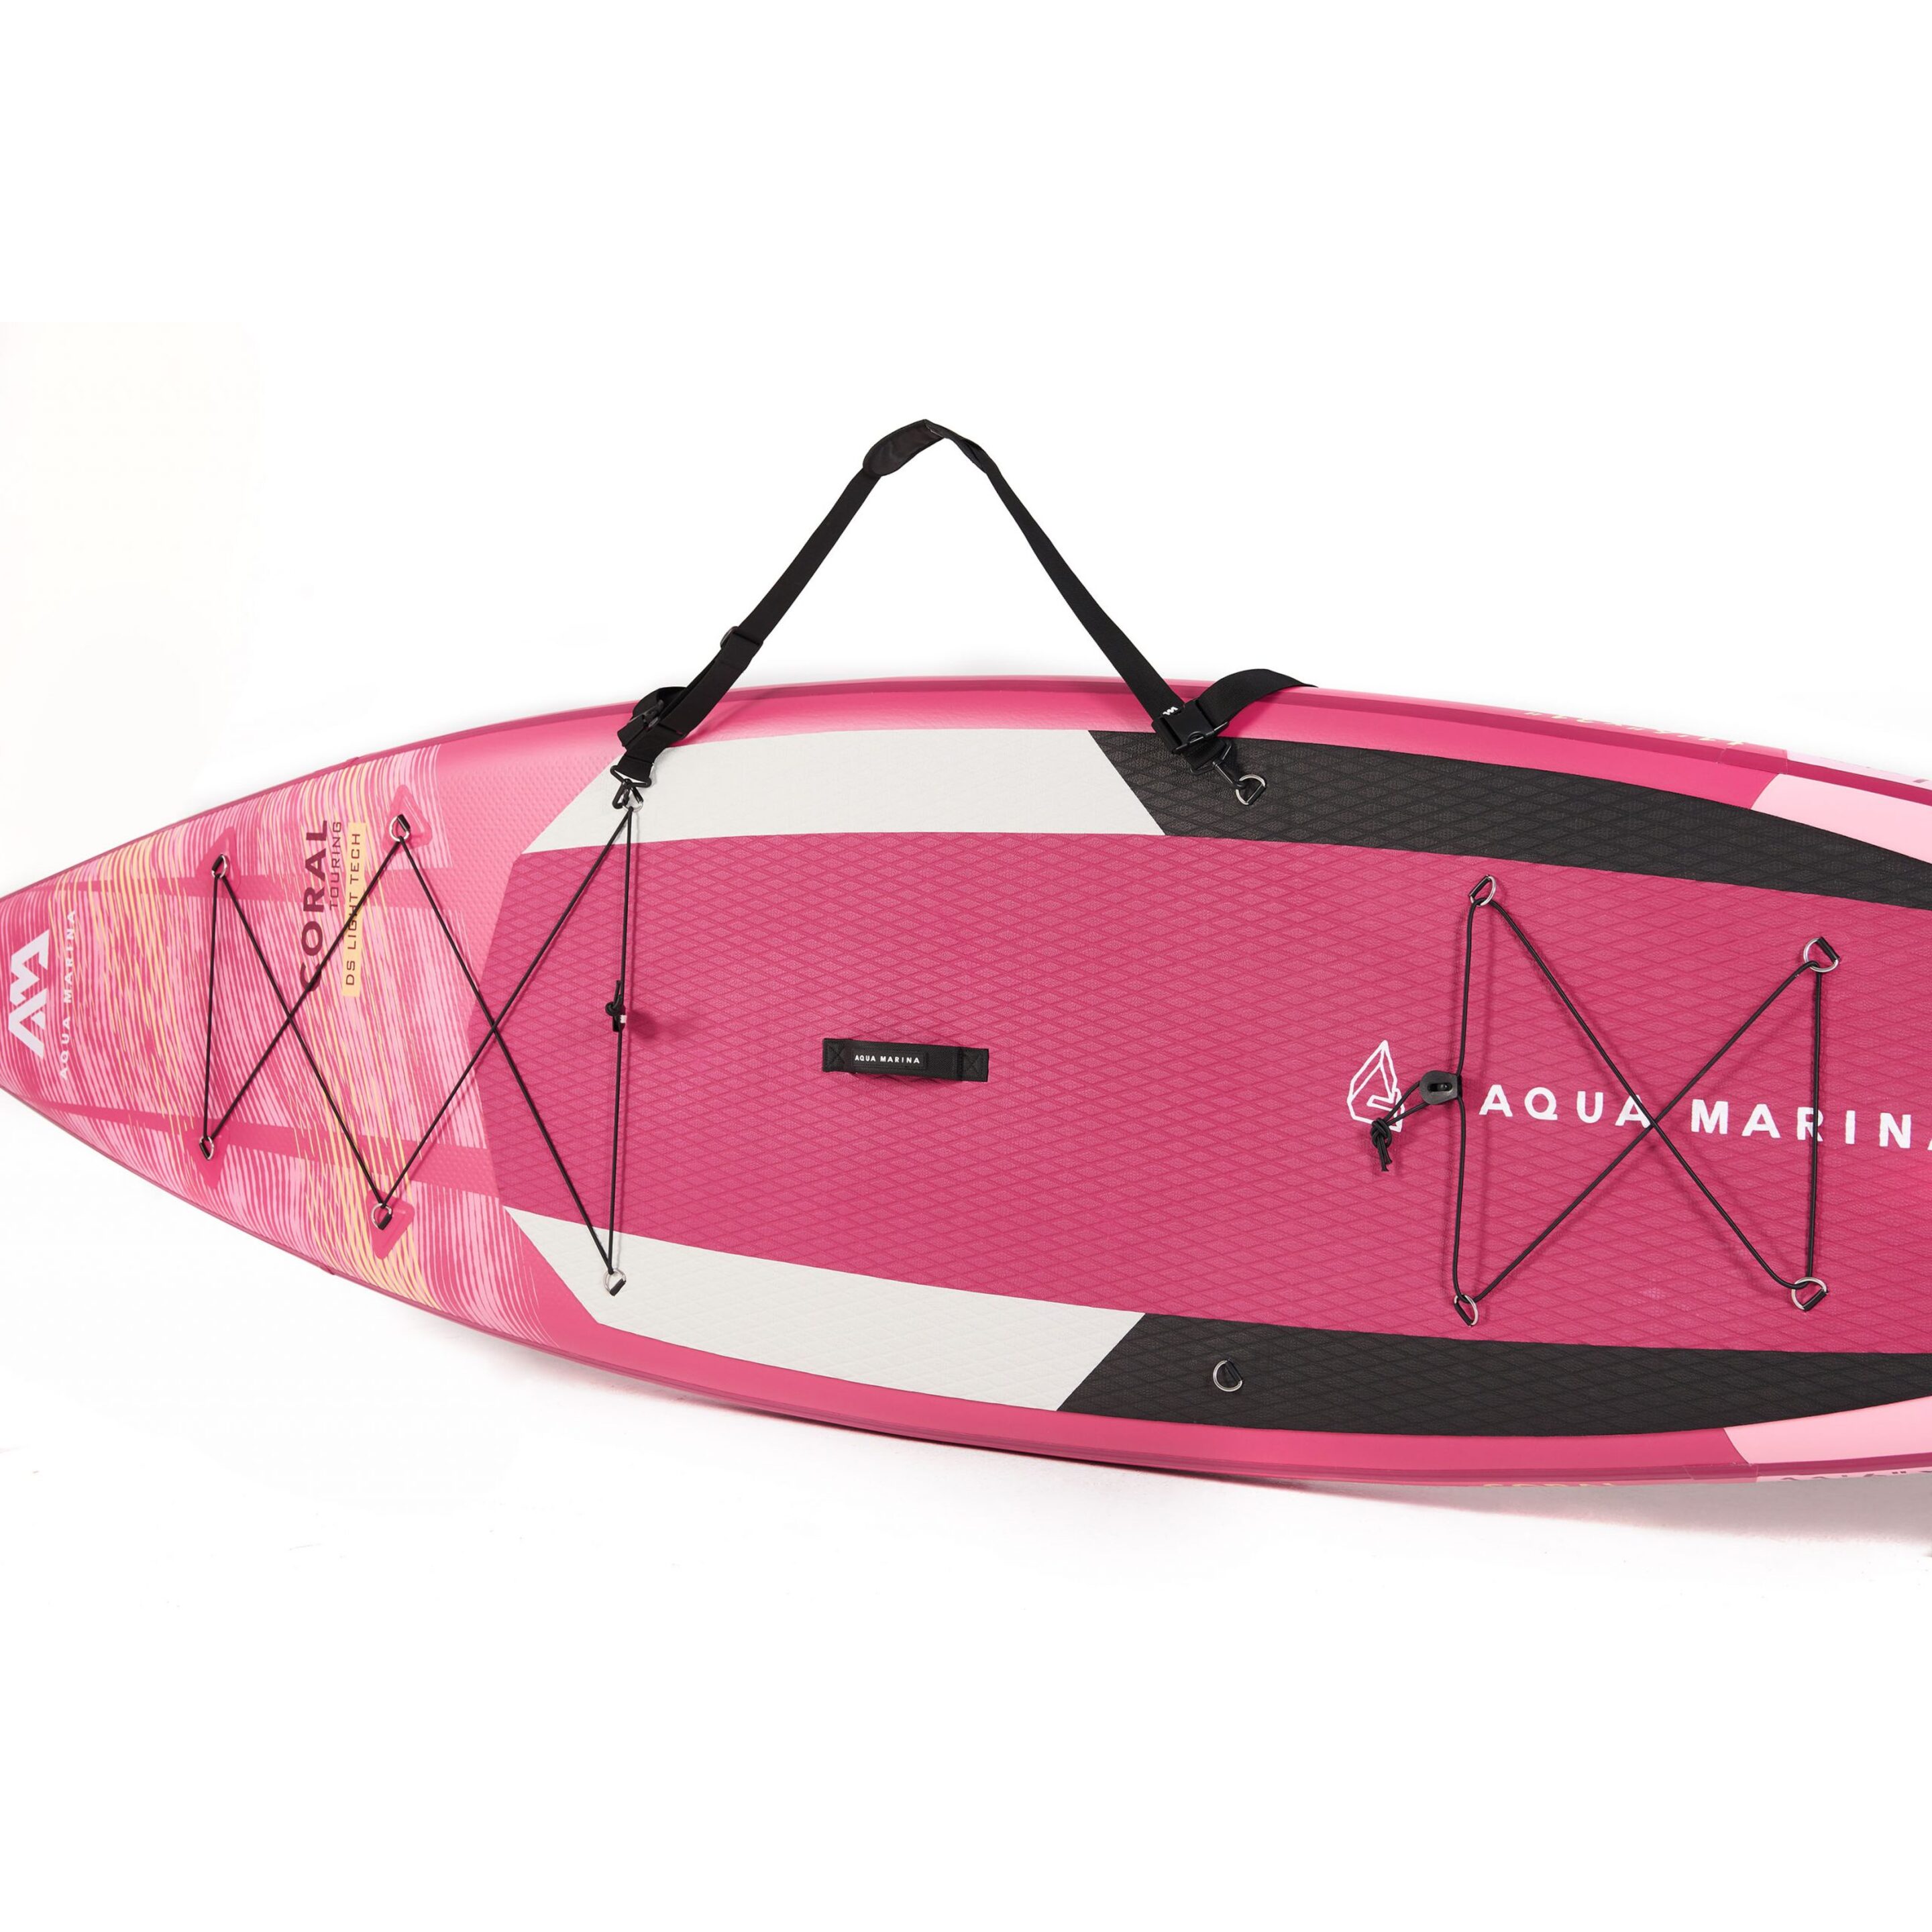 Tabla Paddle Surf Aqua Marina Touring 11? 6? - Coral/Burdeos - Touring Series  MKP